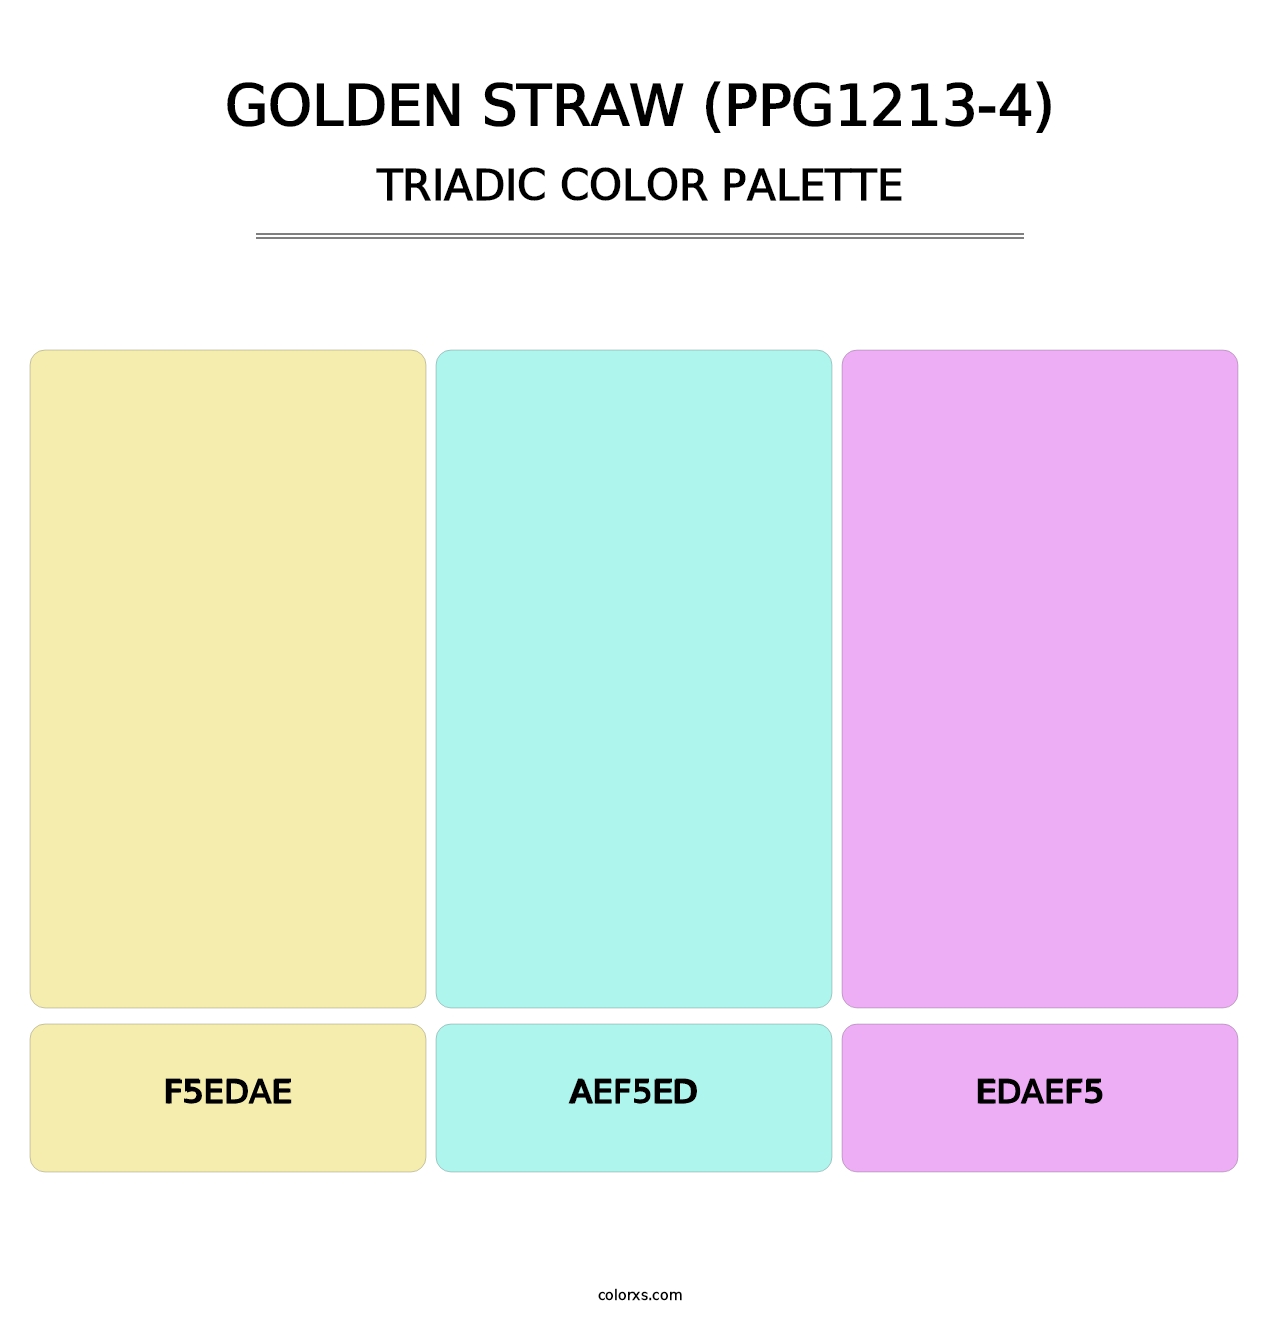 Golden Straw (PPG1213-4) - Triadic Color Palette